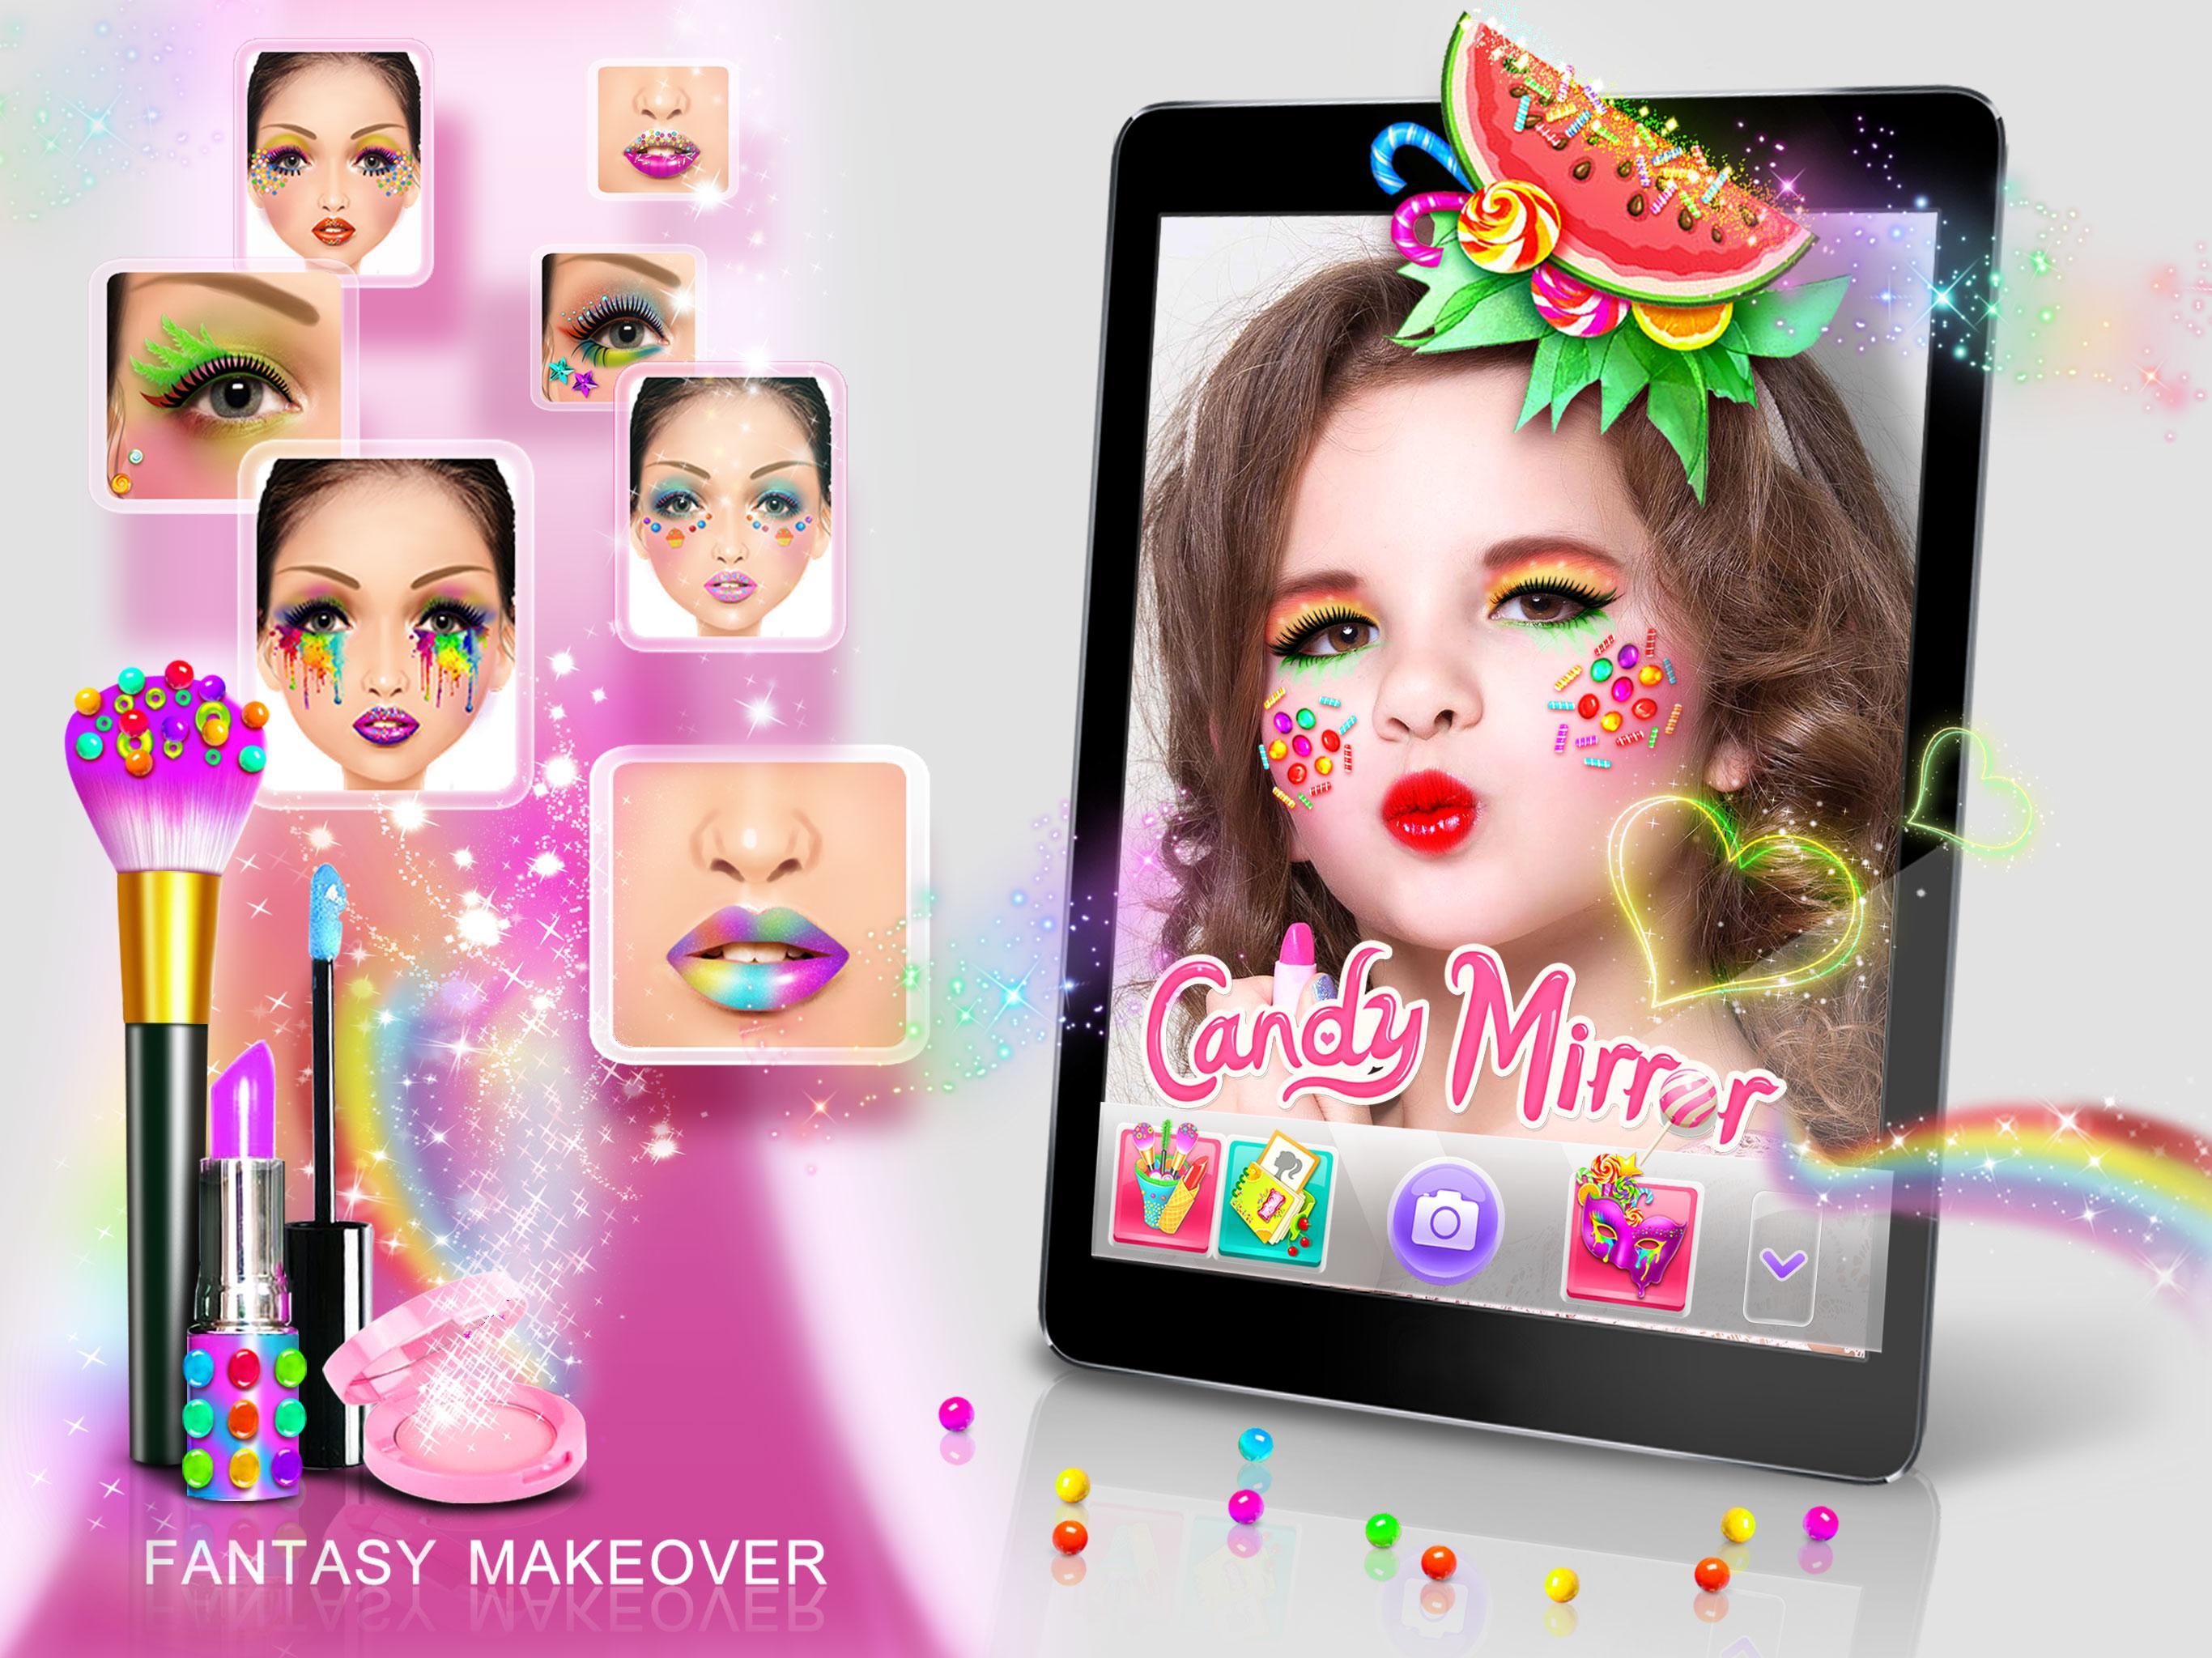 Screenshot 1 of Candy Mirror ❤ Fantasia Candy M 1.4